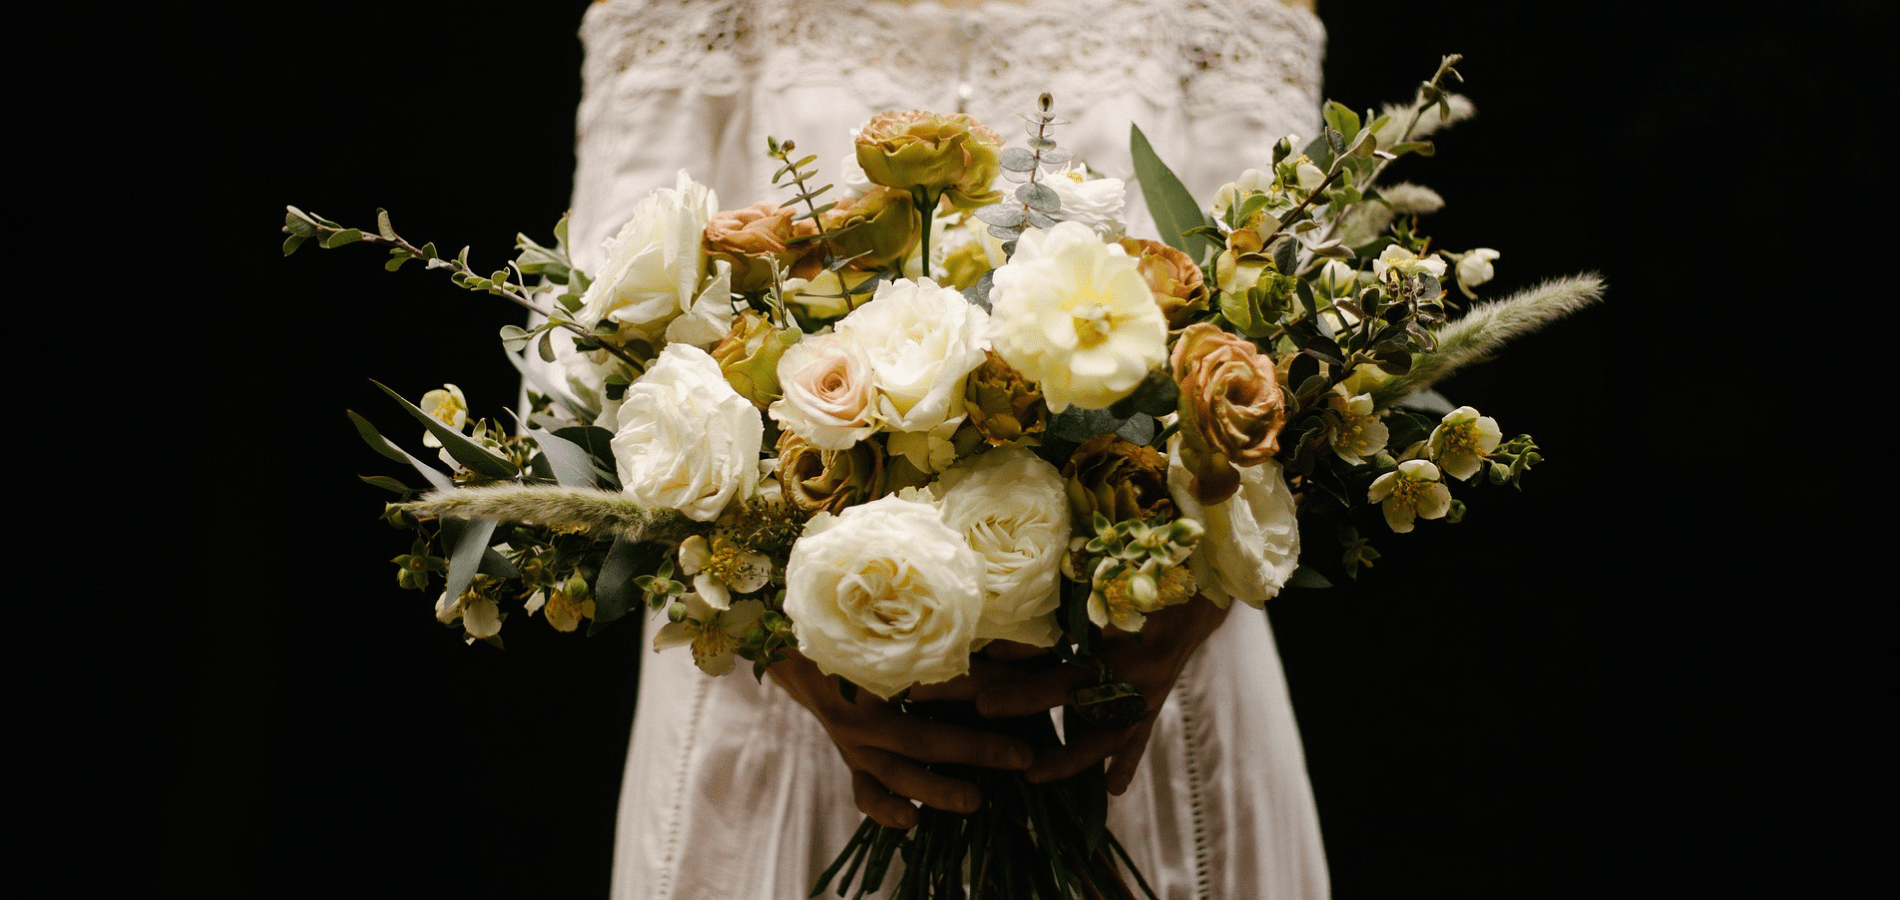 Woman in wedding dress with flower bouquet